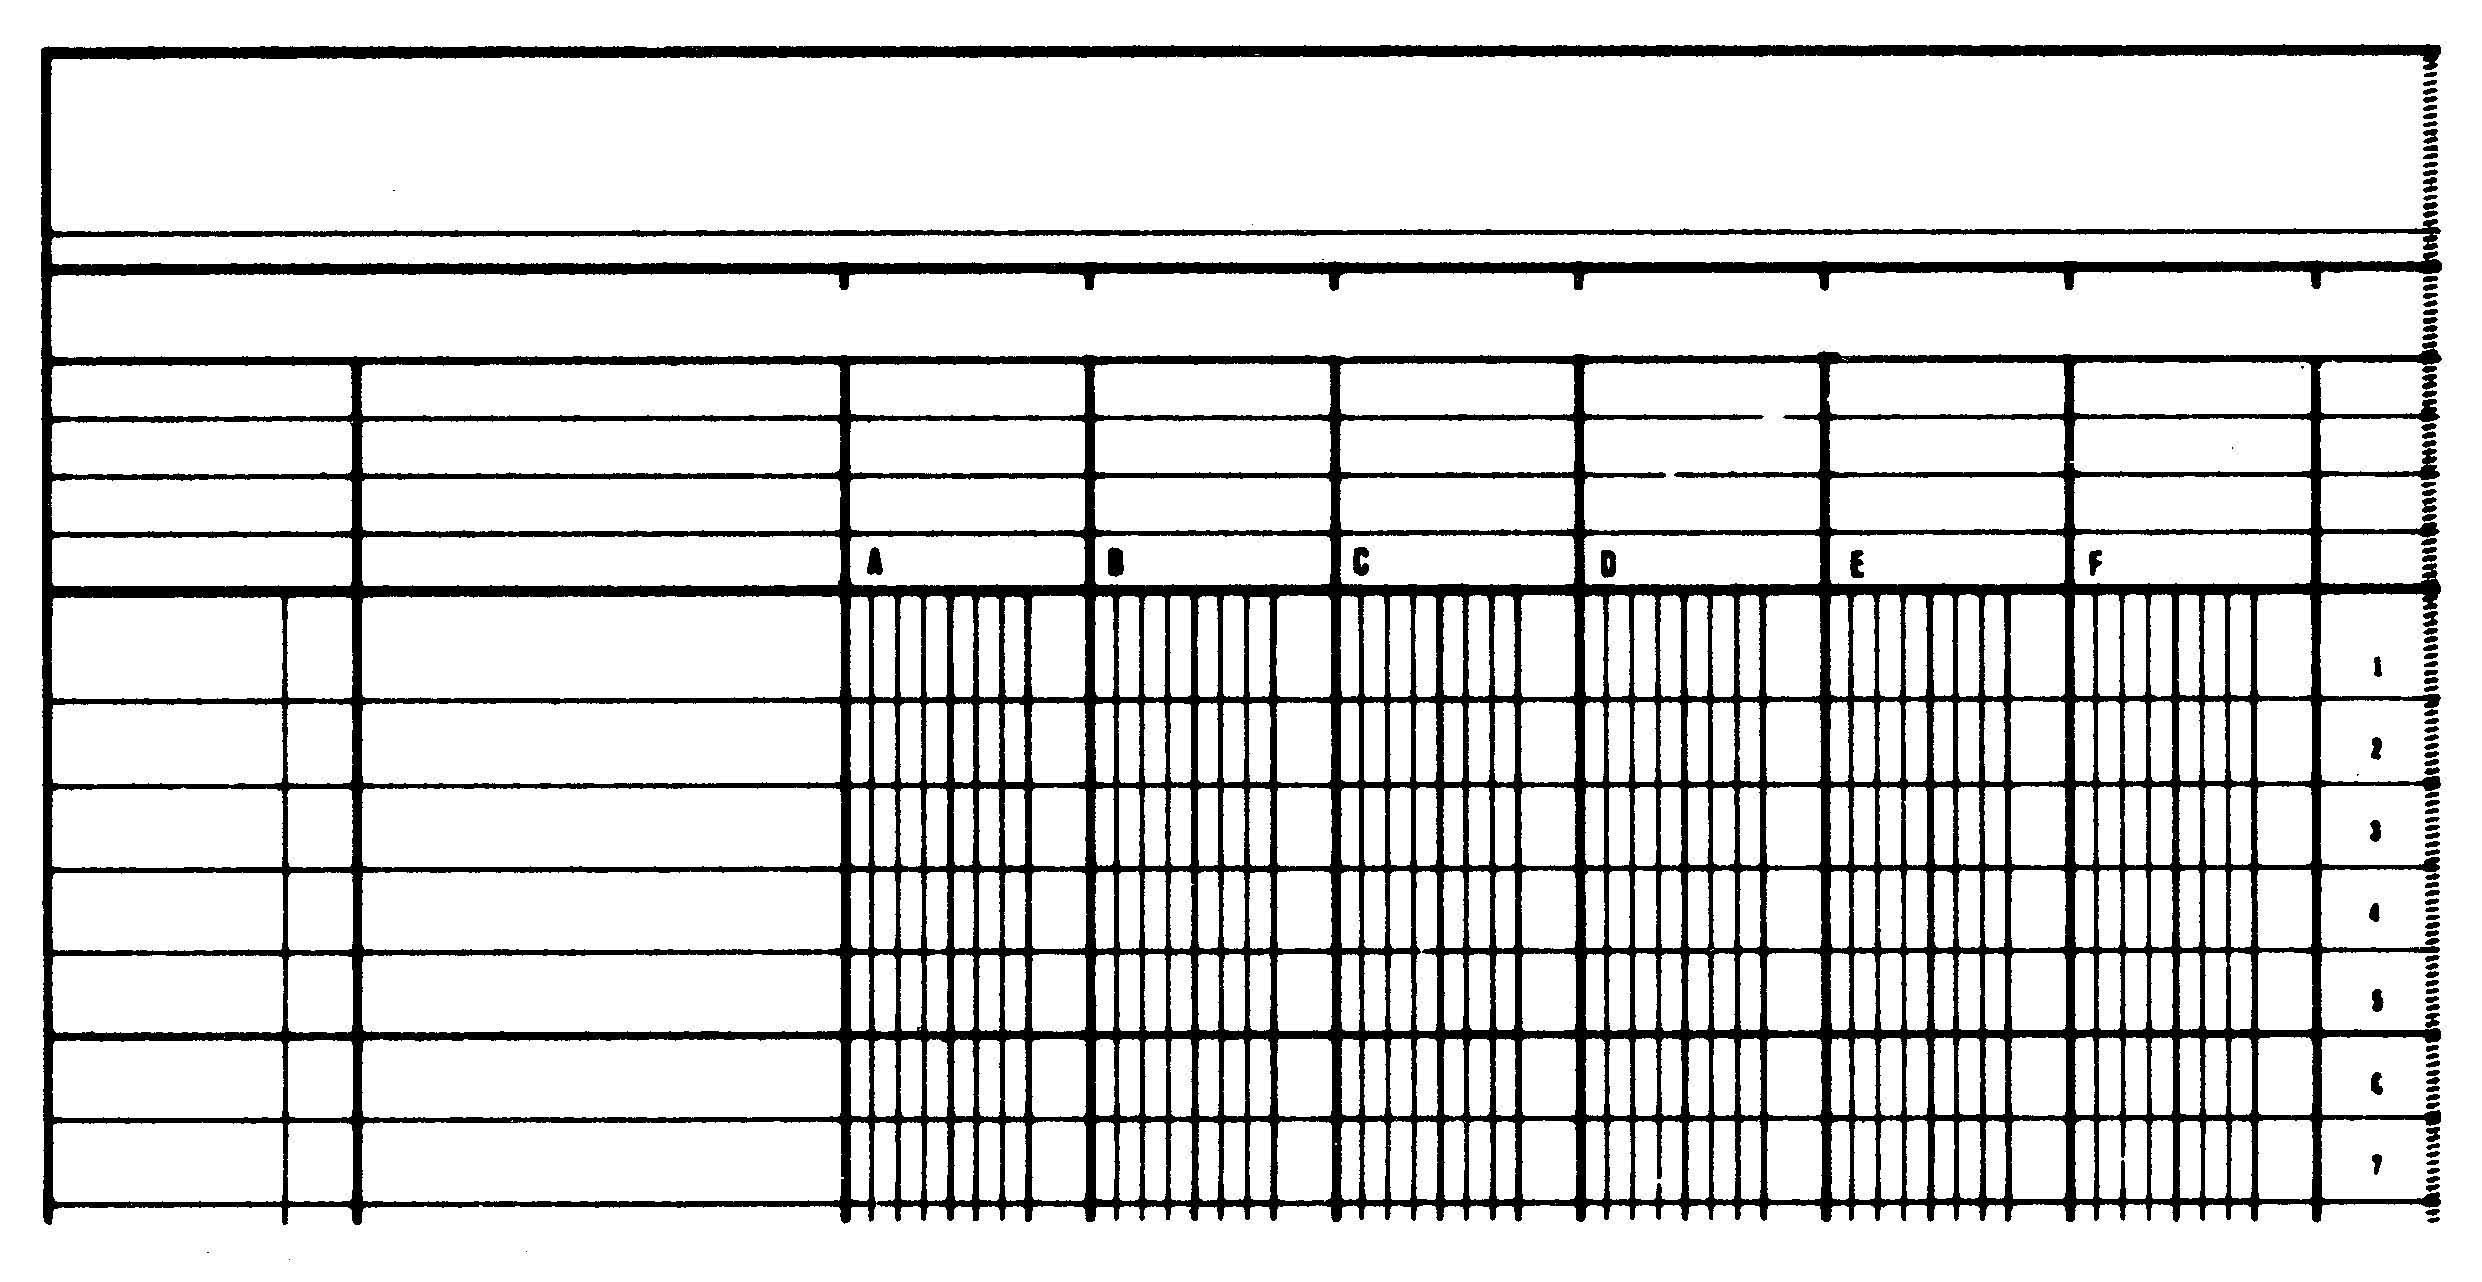 SIMPLEX Livre statistique A4 19091 6 colonnen, vert 40 feuilles